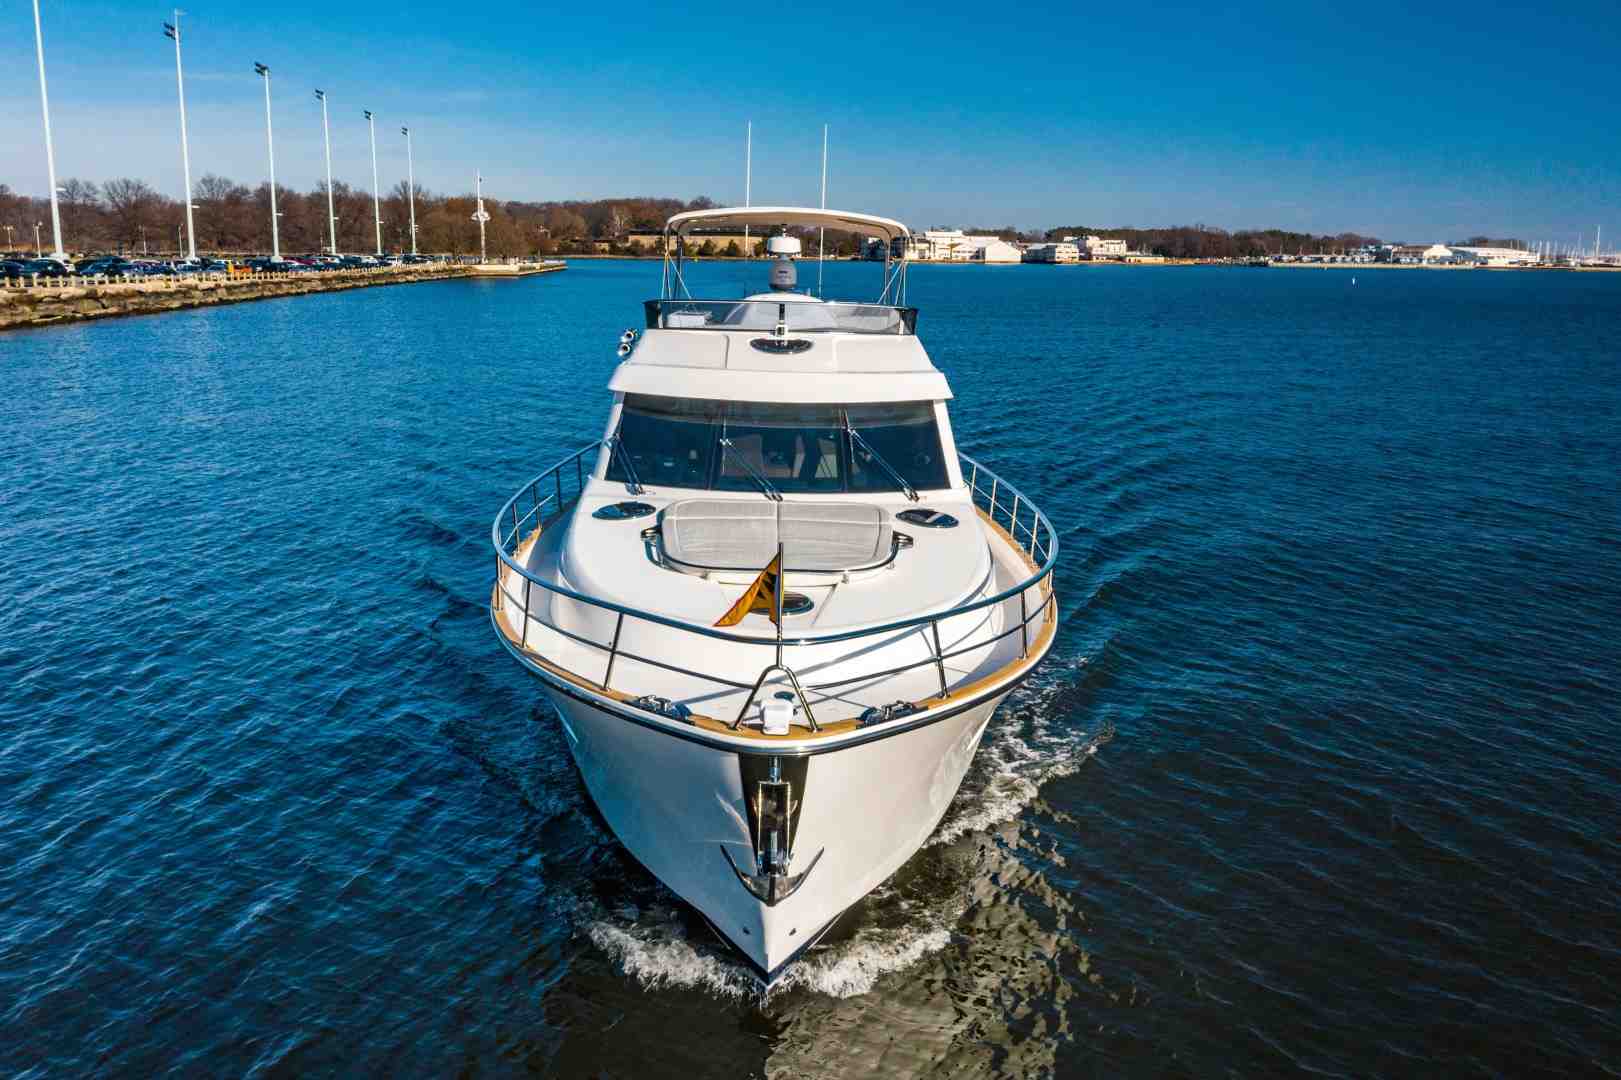  boat rentals Massachusetts HYDE PARK Massachusetts  Scout Belize 54 2015 54 